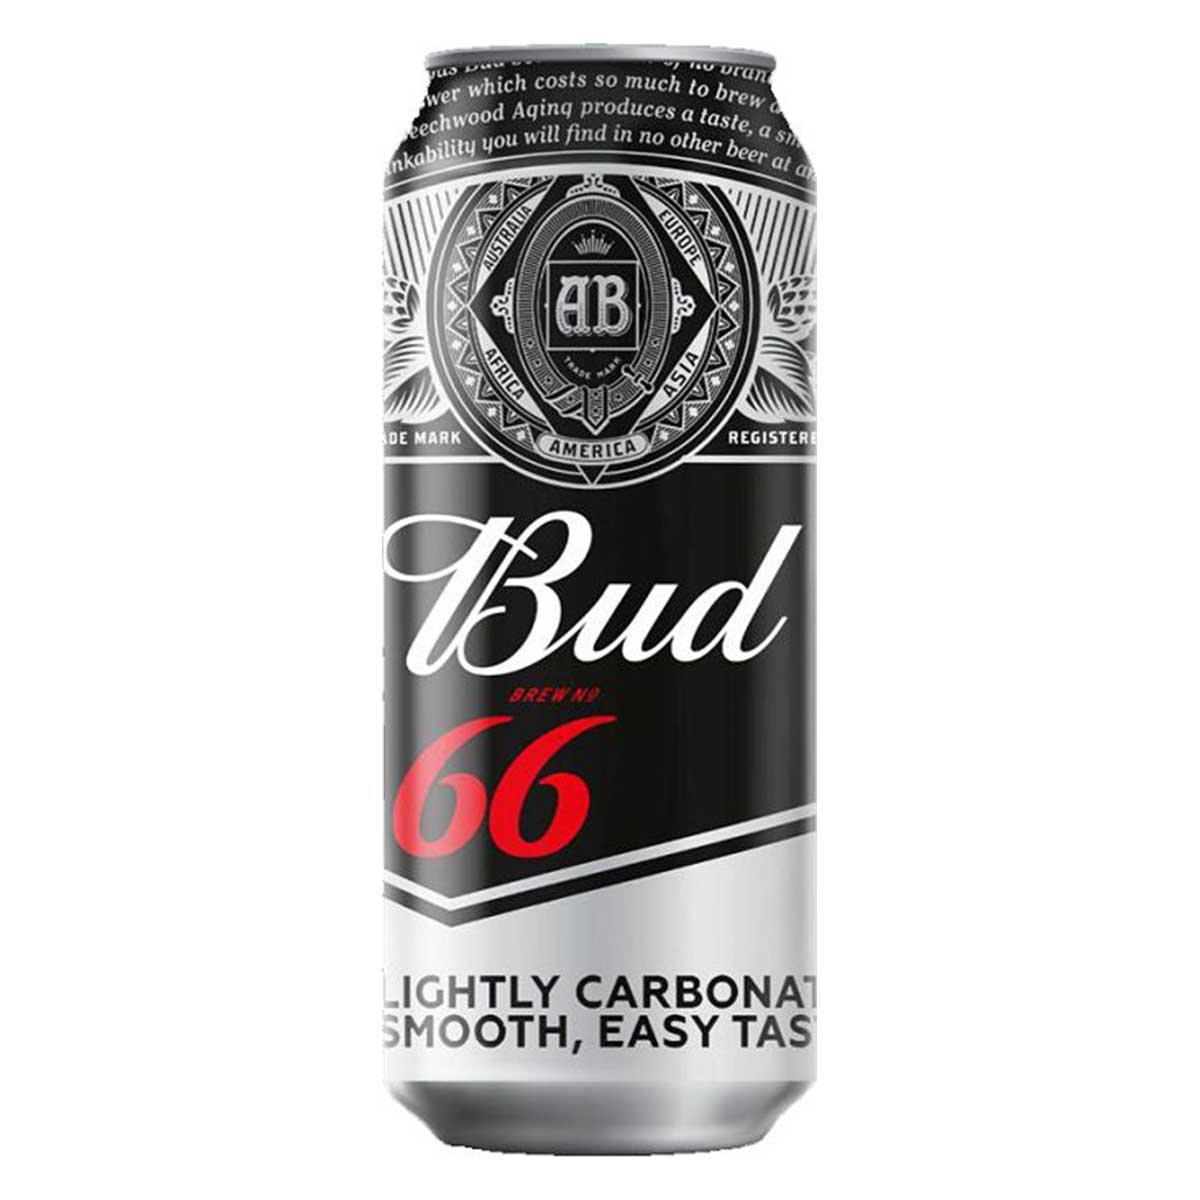 Пиво бад красное. Пиво БАД 66 светлое 4,3% 0,45л ж/б. Пиво БАД 66 жб. Пиво БАД светлое ж/б 0.45. Пиво светлое Bud 0.45 л.